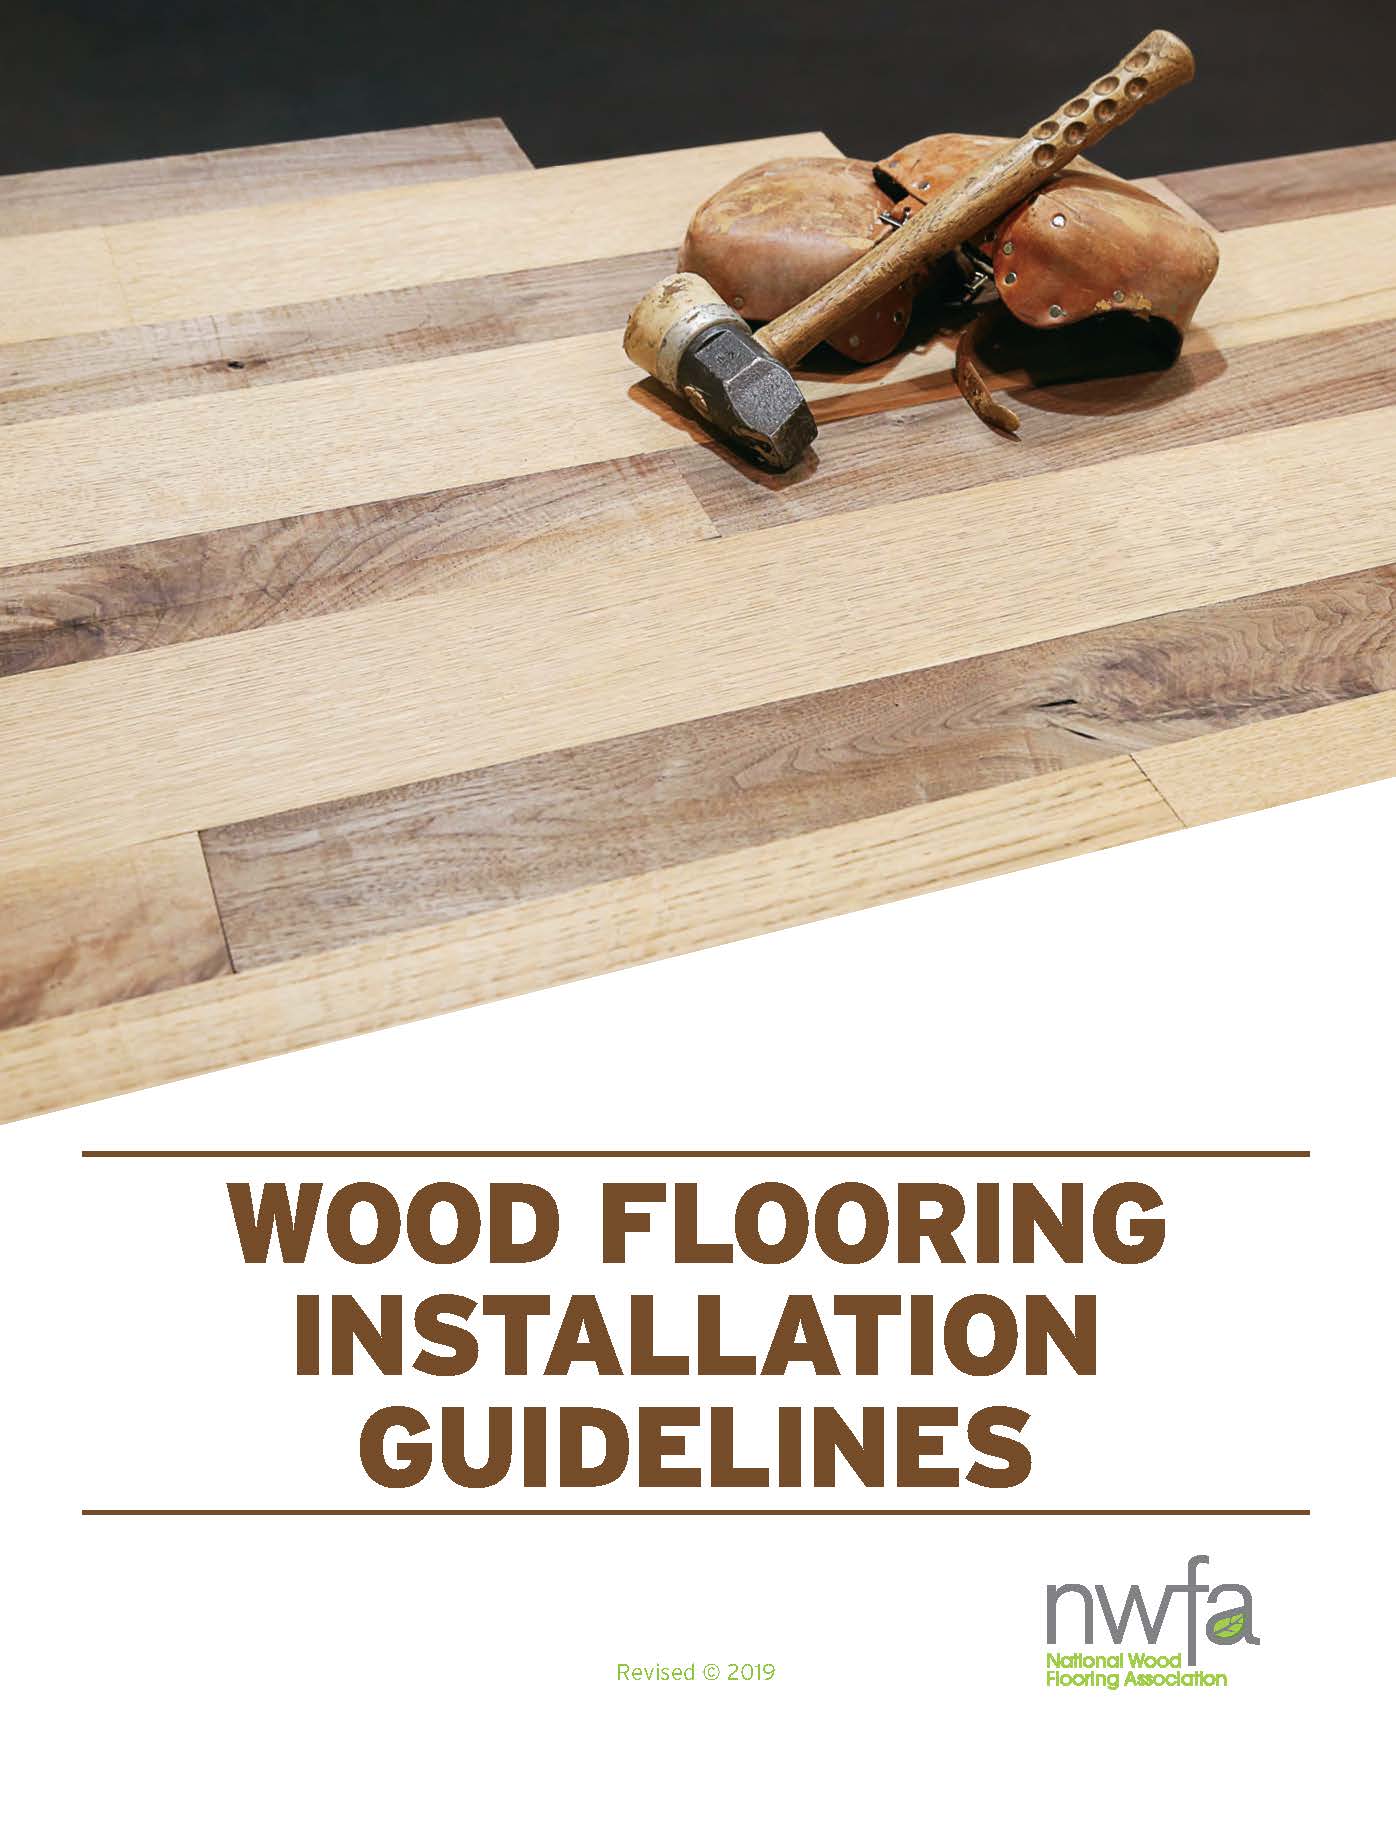 Nwfa Publishes Updated Flooring, Hardwood Flooring Association Installation